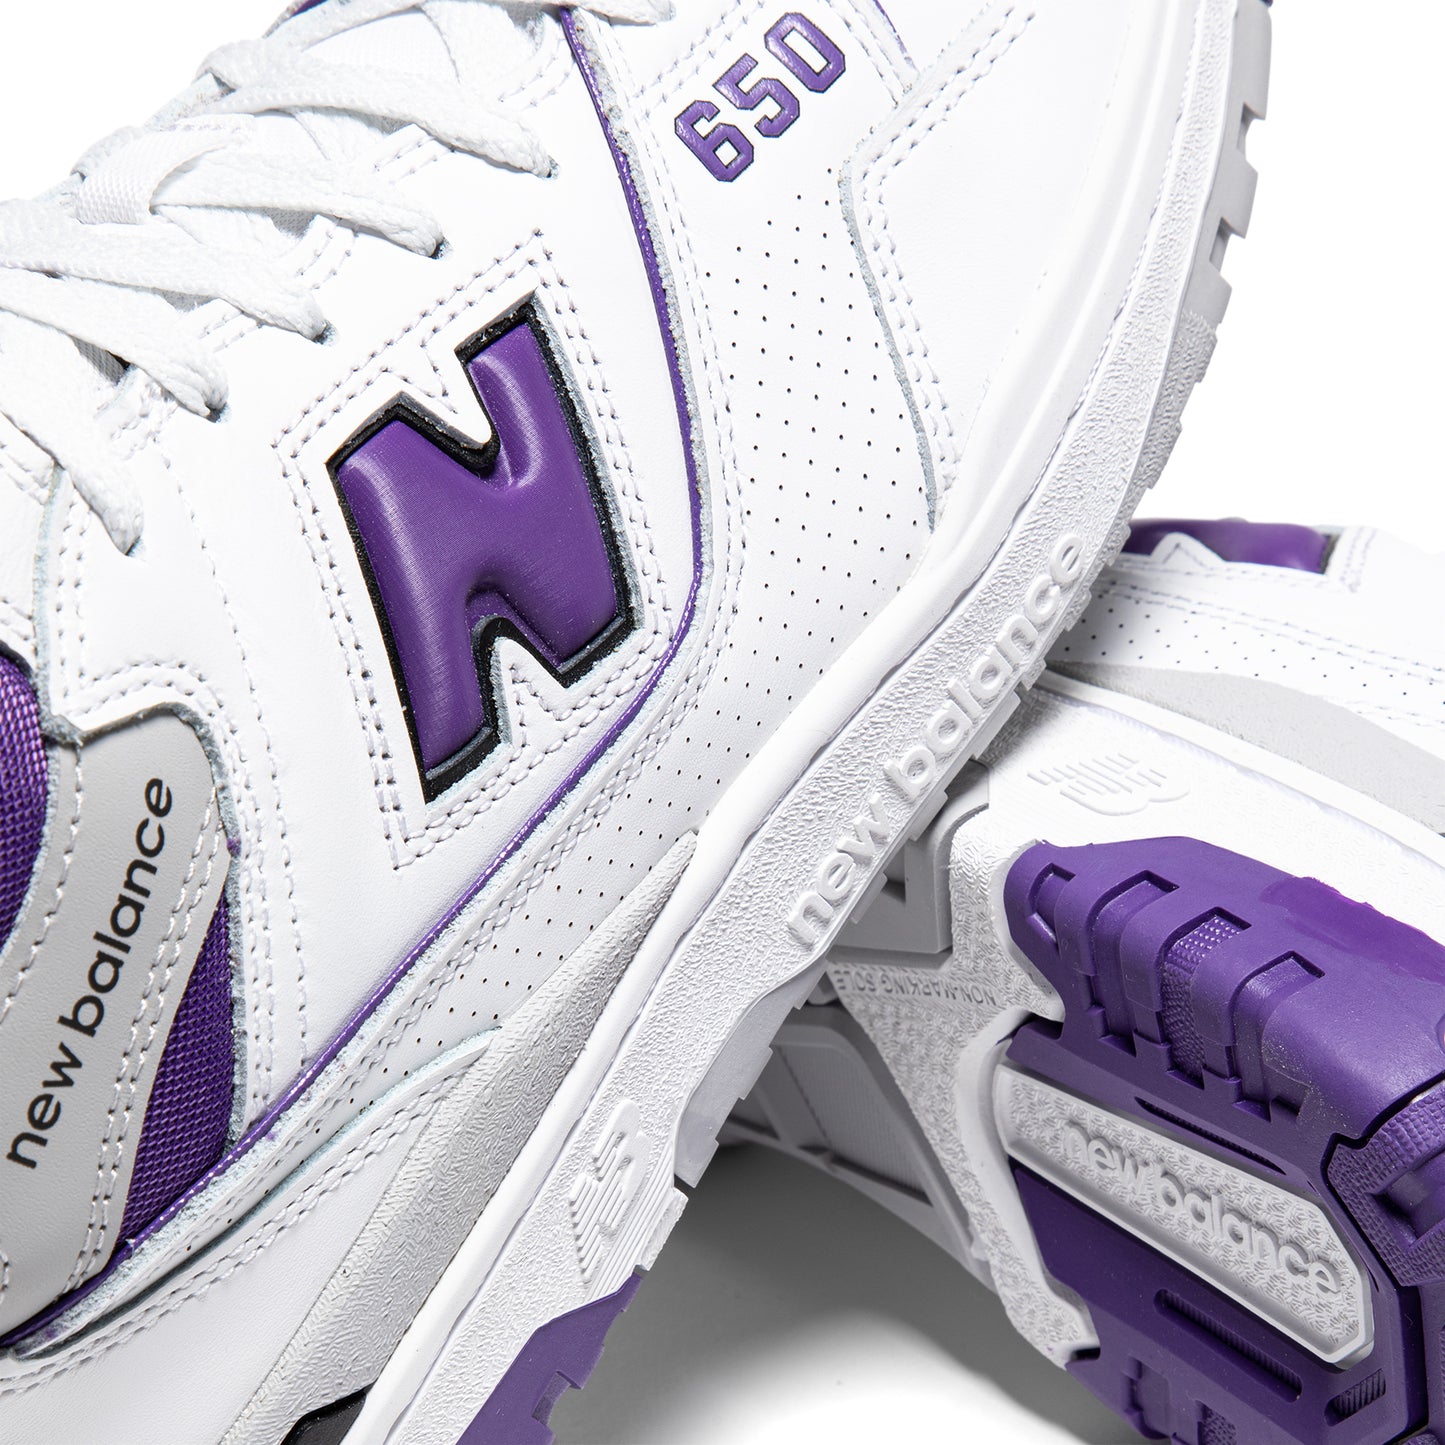 New Balance 650 (White/Purple)